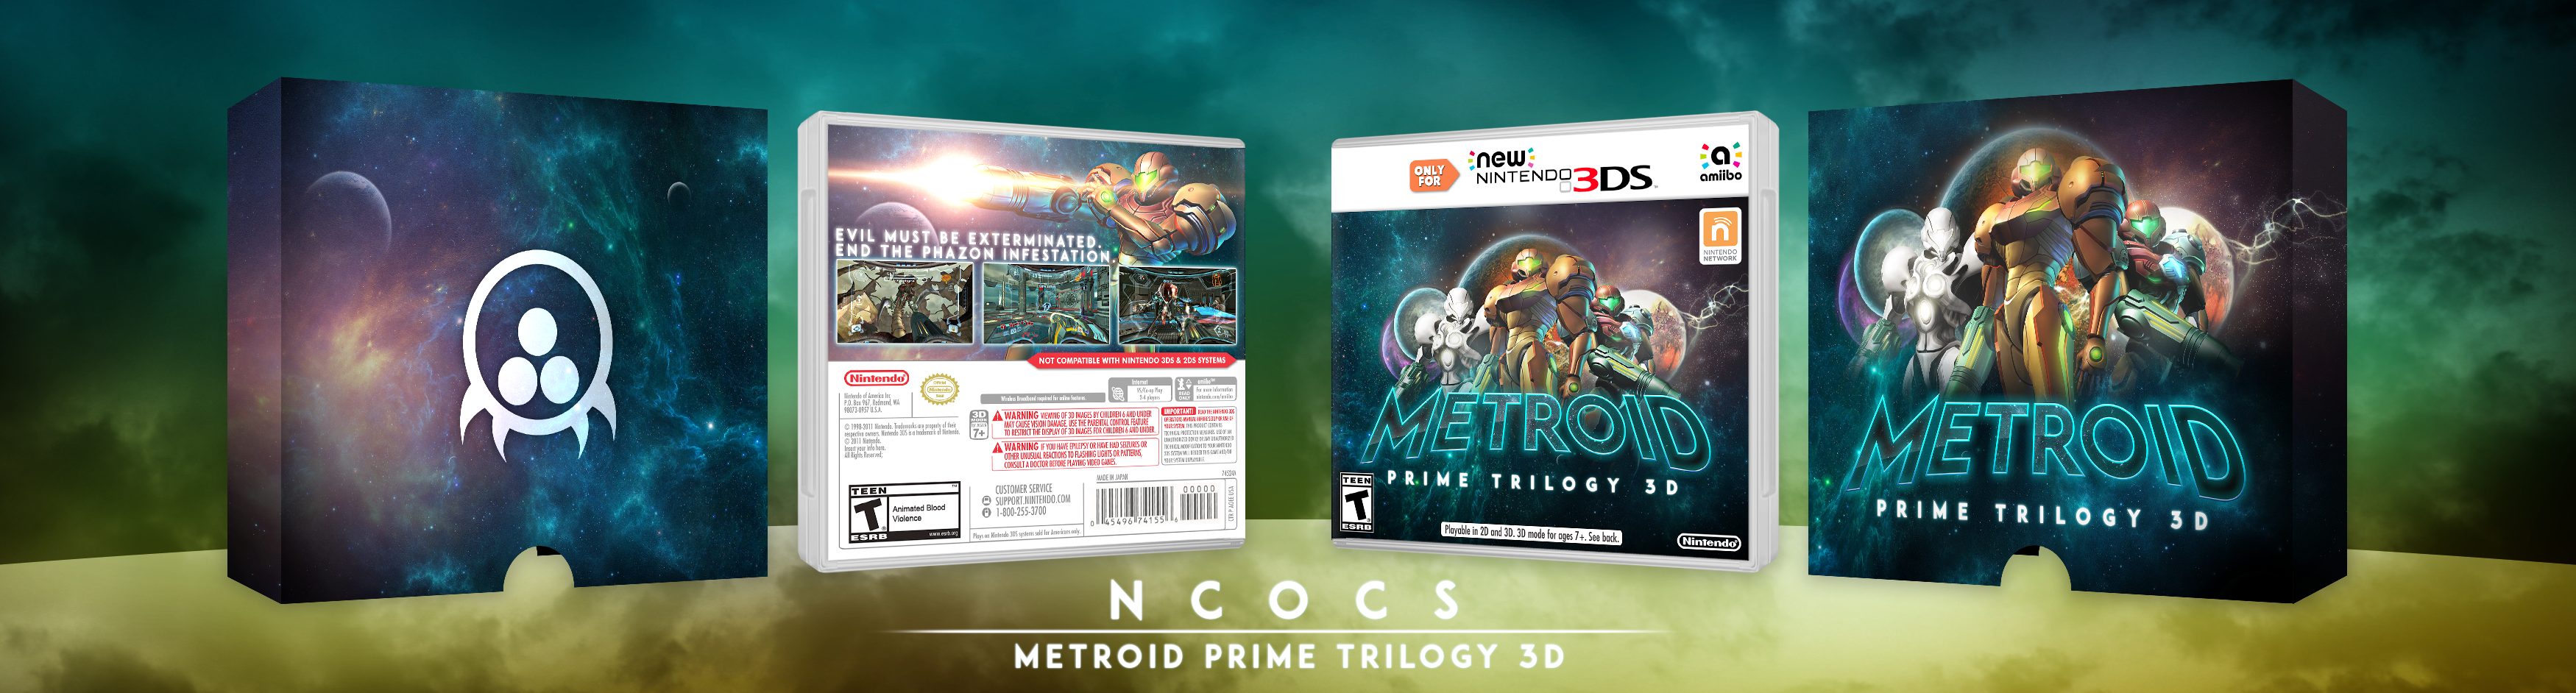 Metroid Prime Trilogy 3D box cover